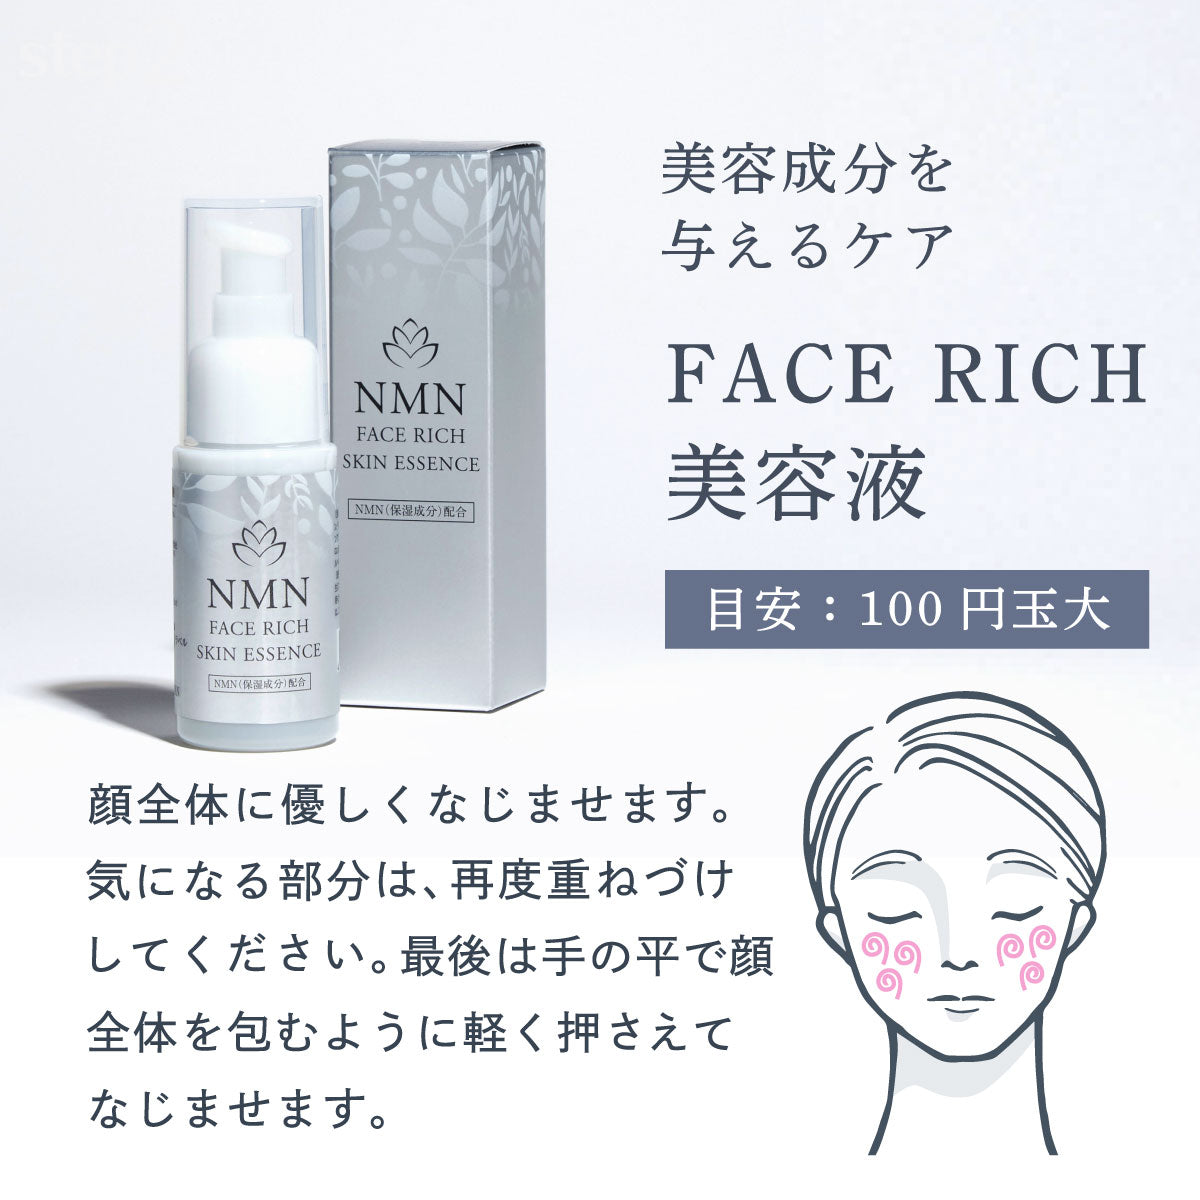 Face Rich Skin Essence